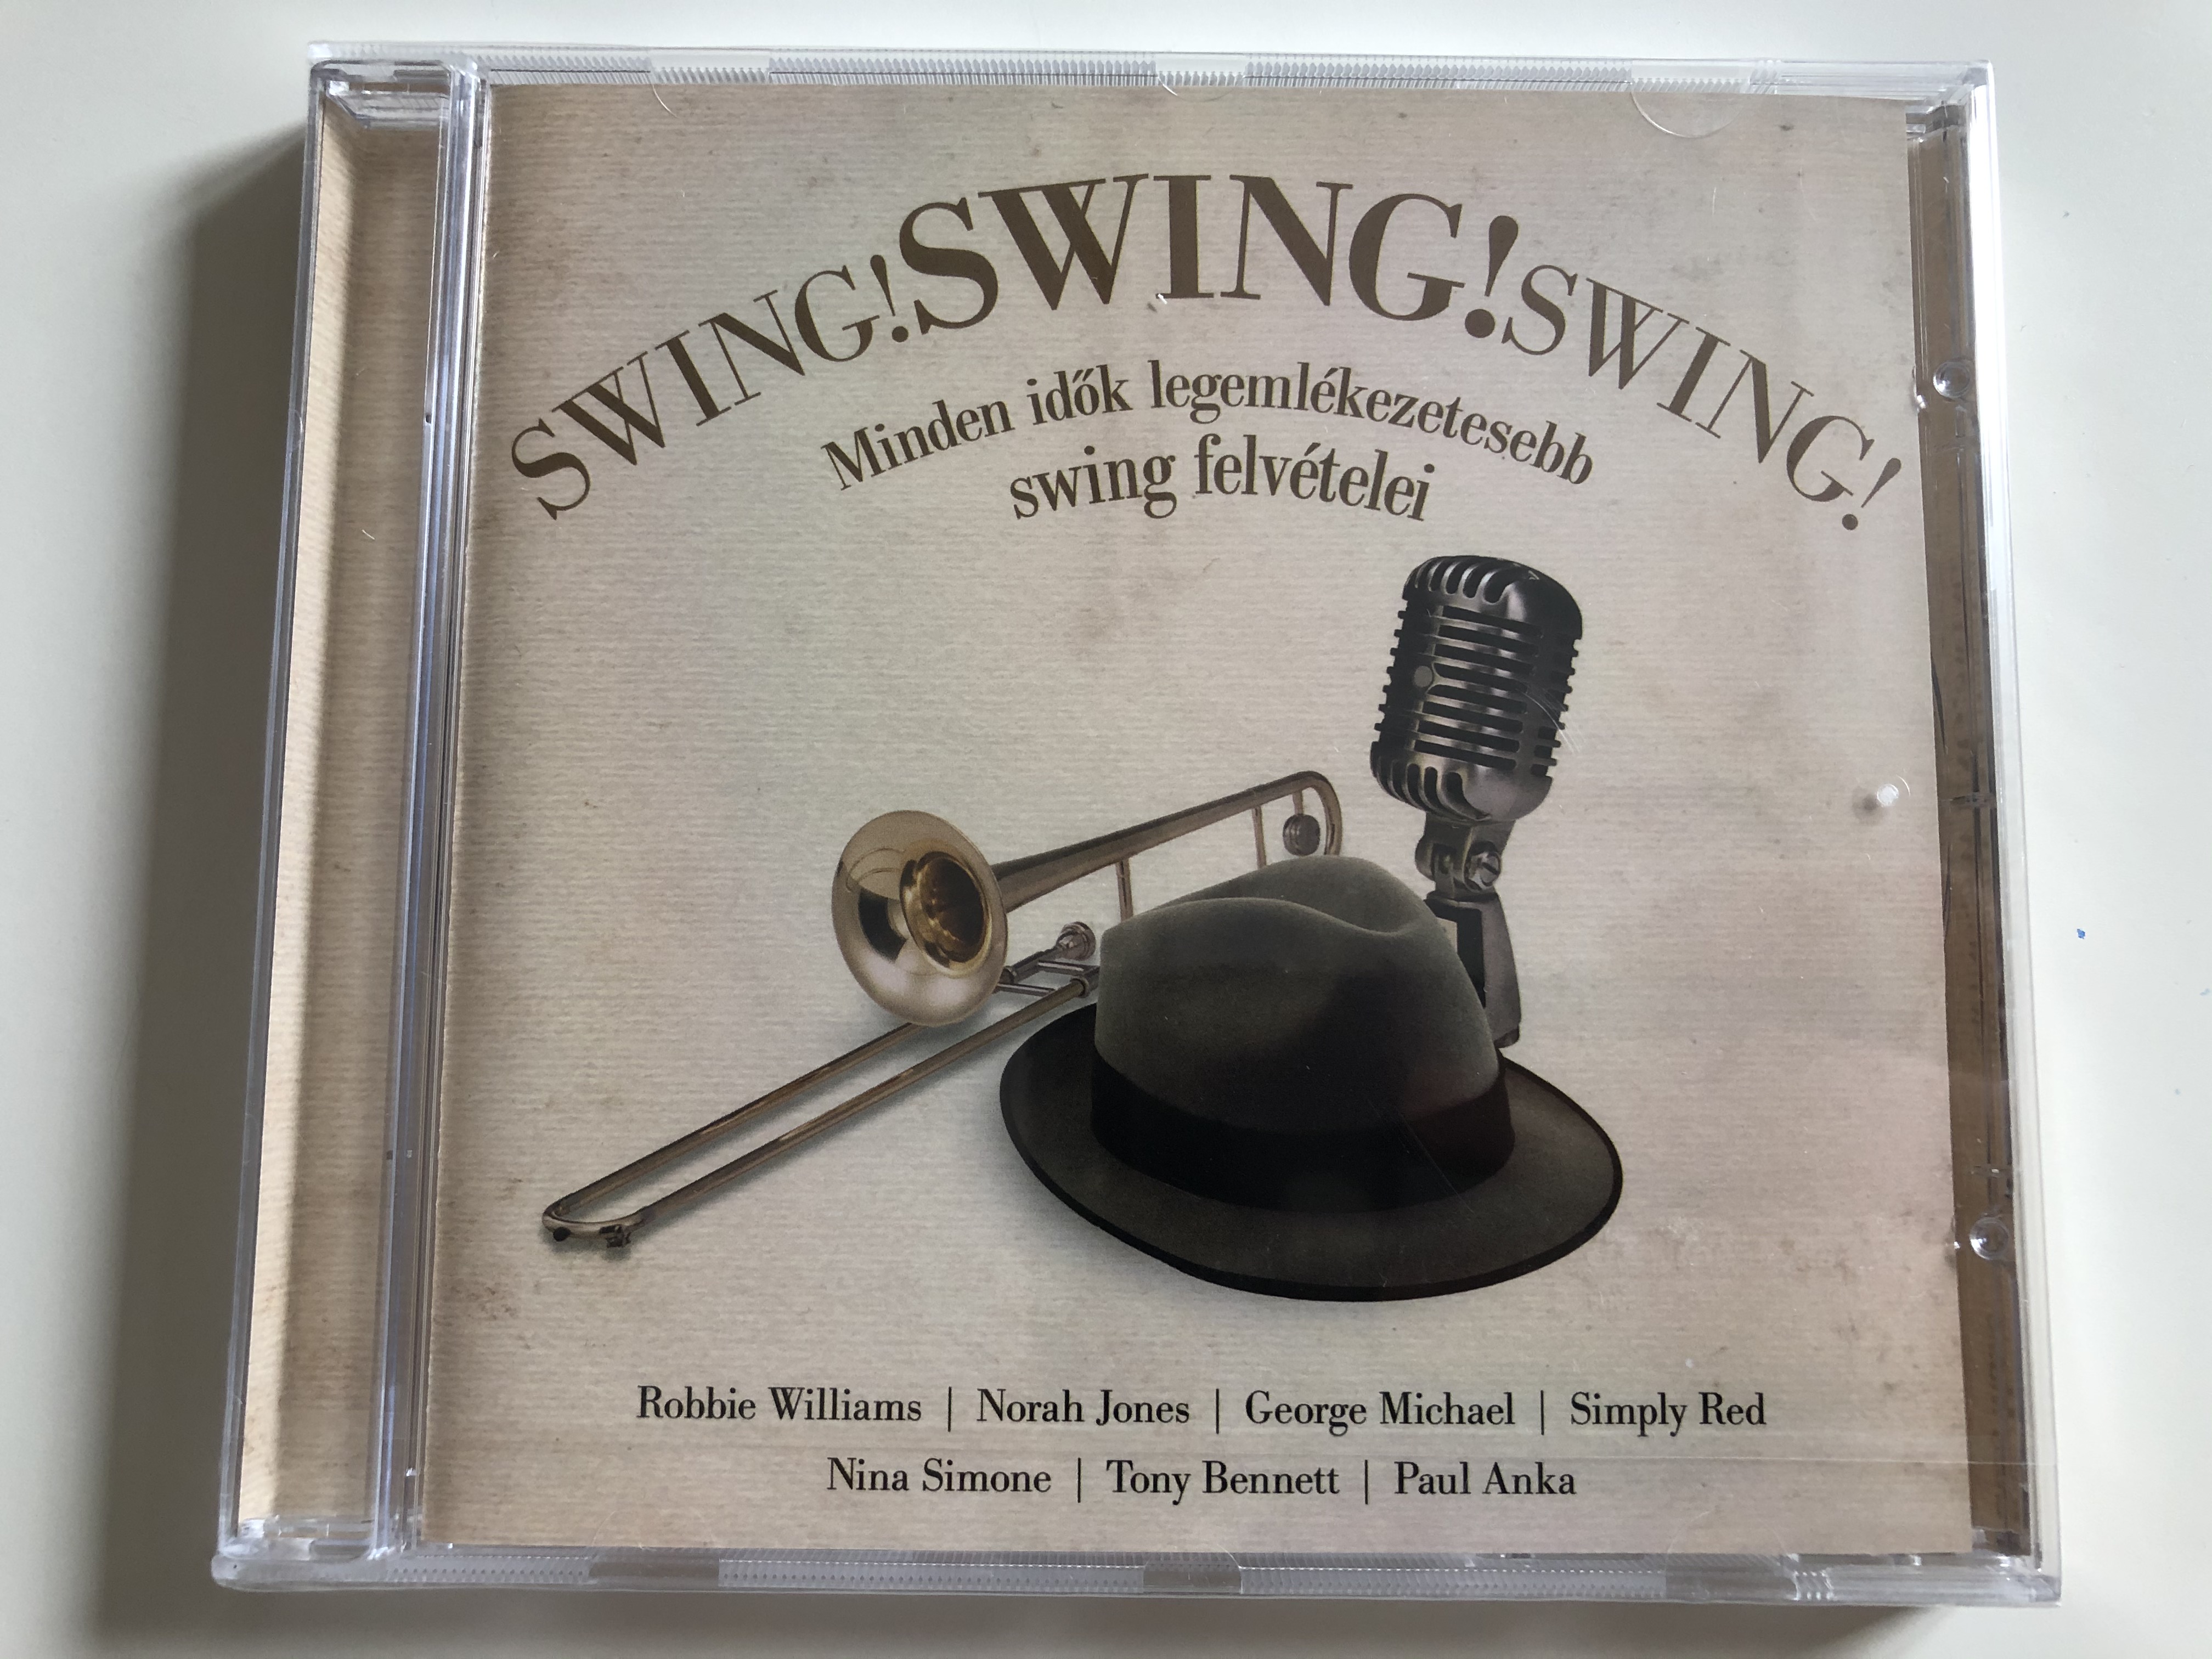 swing-swing-swing-minden-idok-legemlekezetesebb-swing-felvetelei-robbie-williams-norah-jones-george-michael-simply-red-nina-simone-tony-bennett-paul-anka-sony-music-audio-cd-2009-8869-1-.jpg